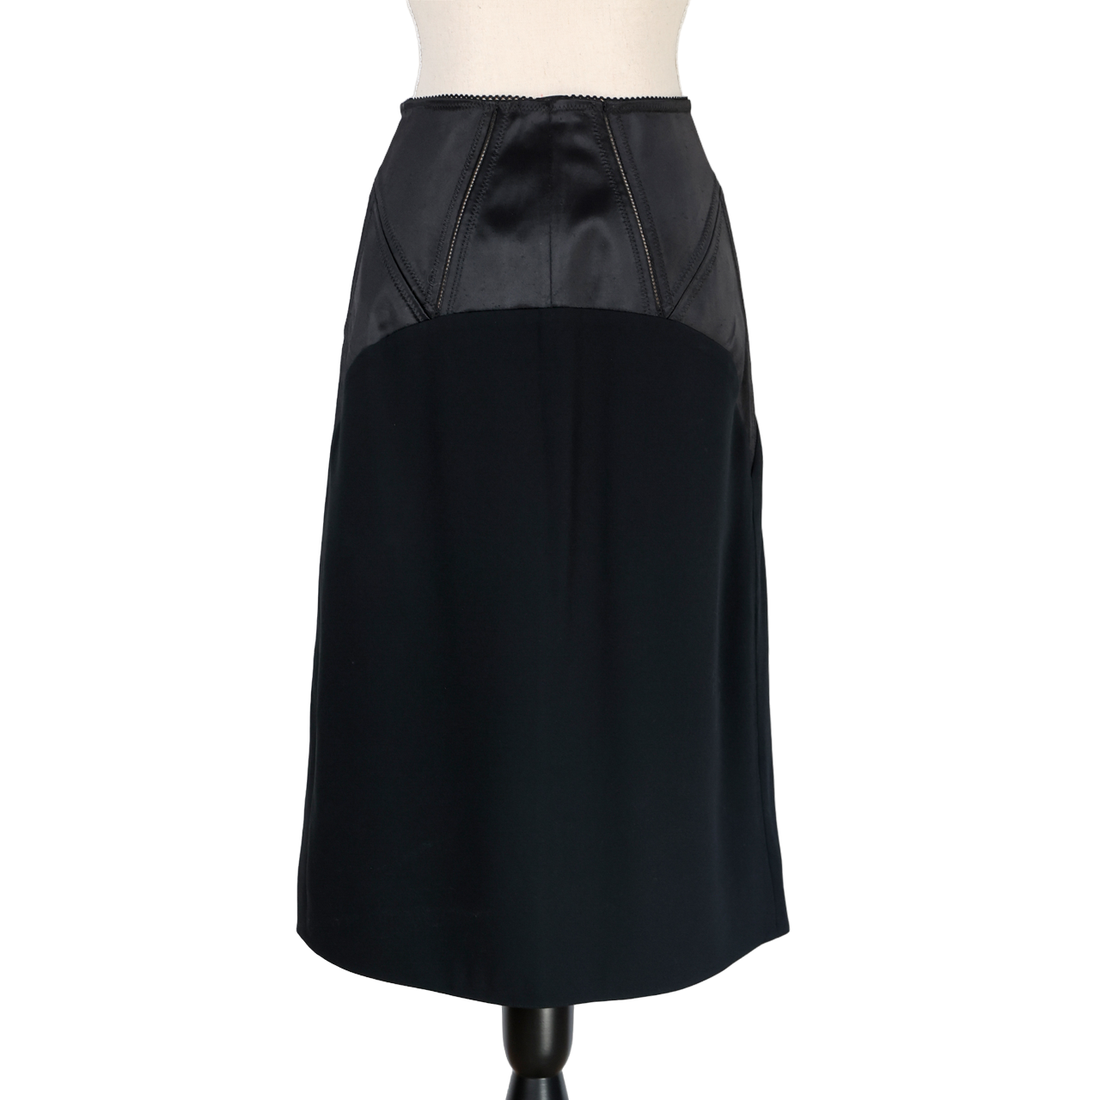 Louis Vuitton skirt with openwork details